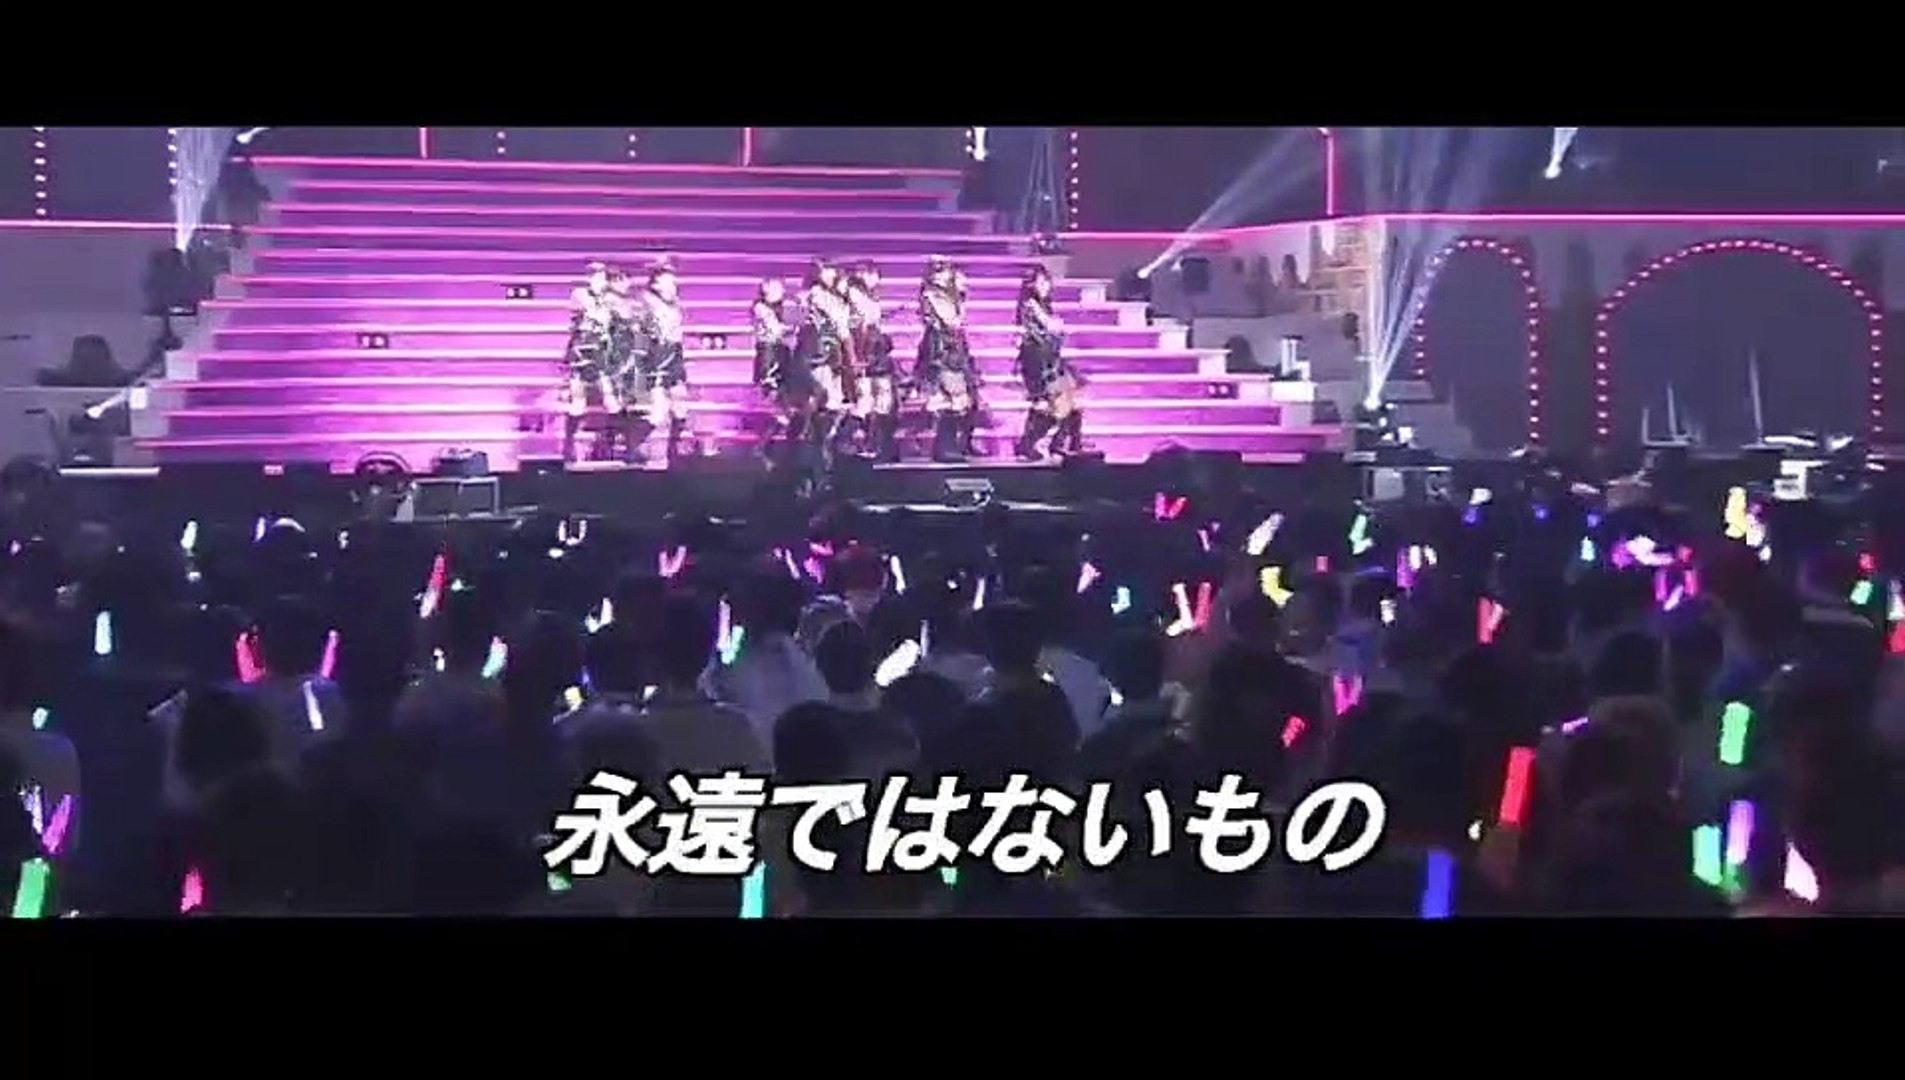 乃木坂46 Merry X Mas Show 15 01 動画 Dailymotion